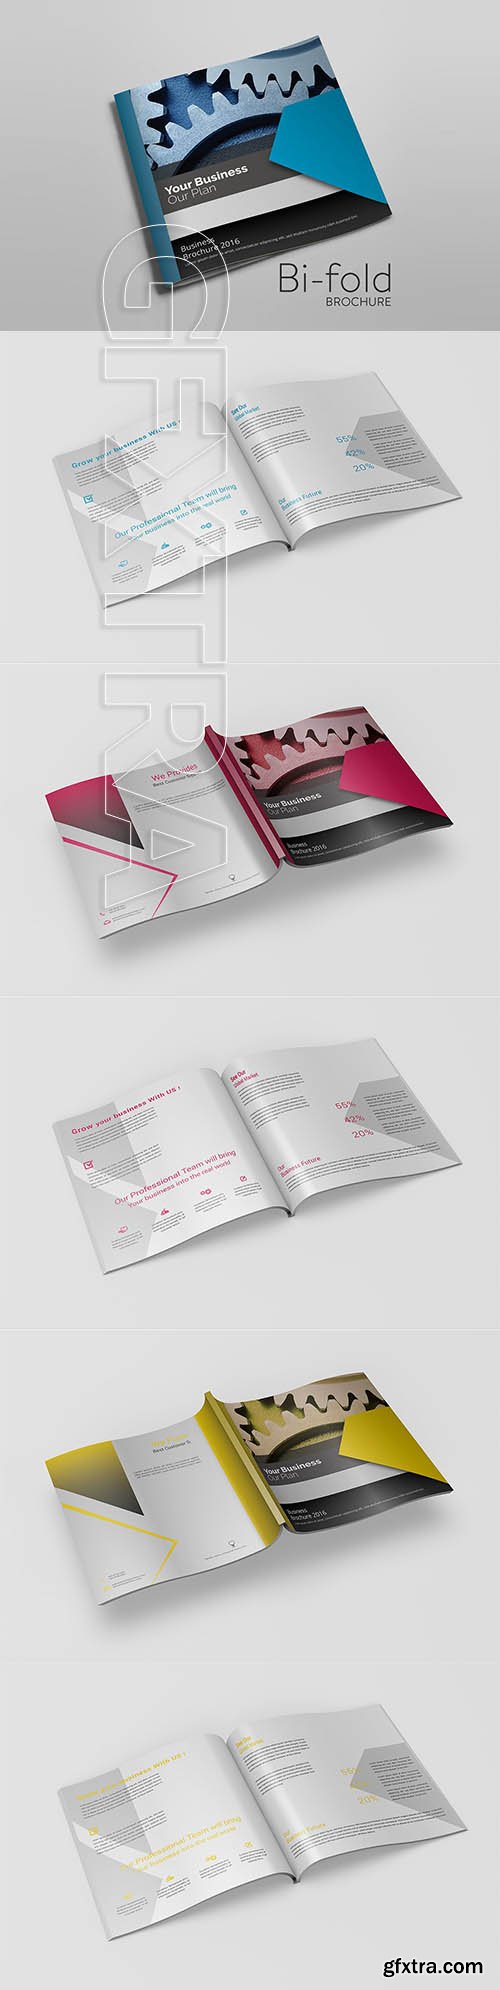 CreativeMarket - Bi-fold Square Brochure 3563018